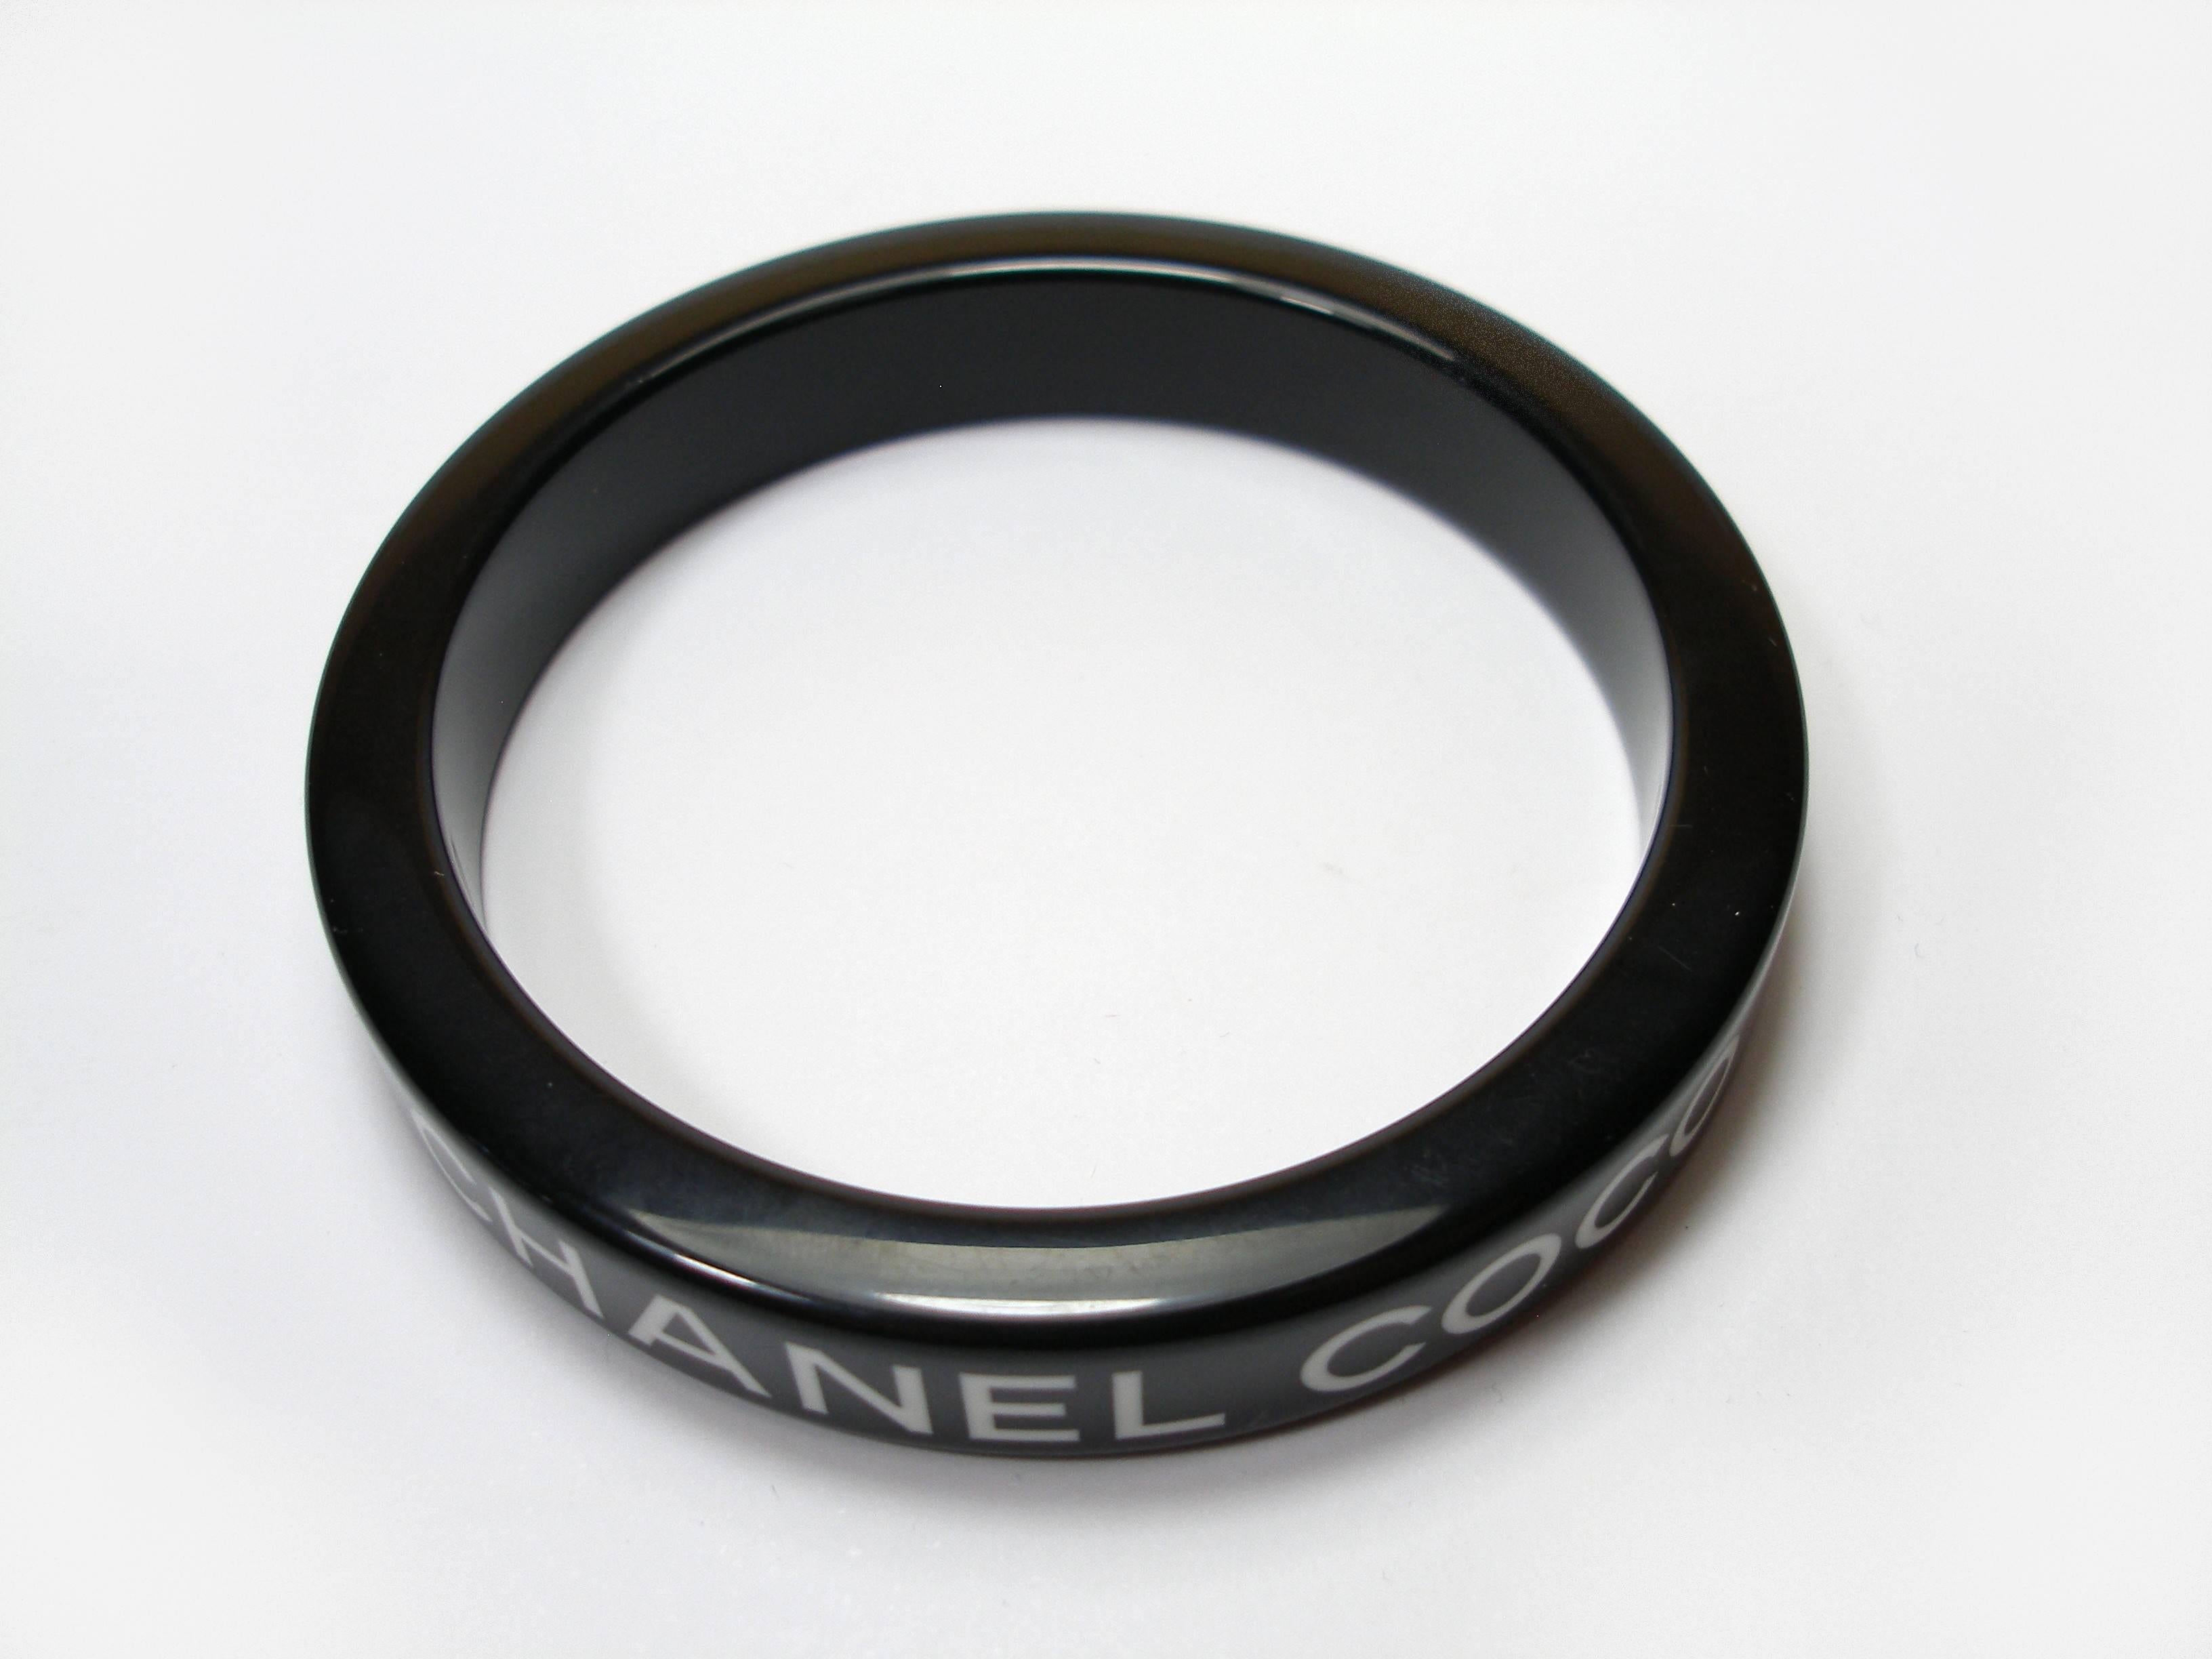 6.5 cm diameter bangle size